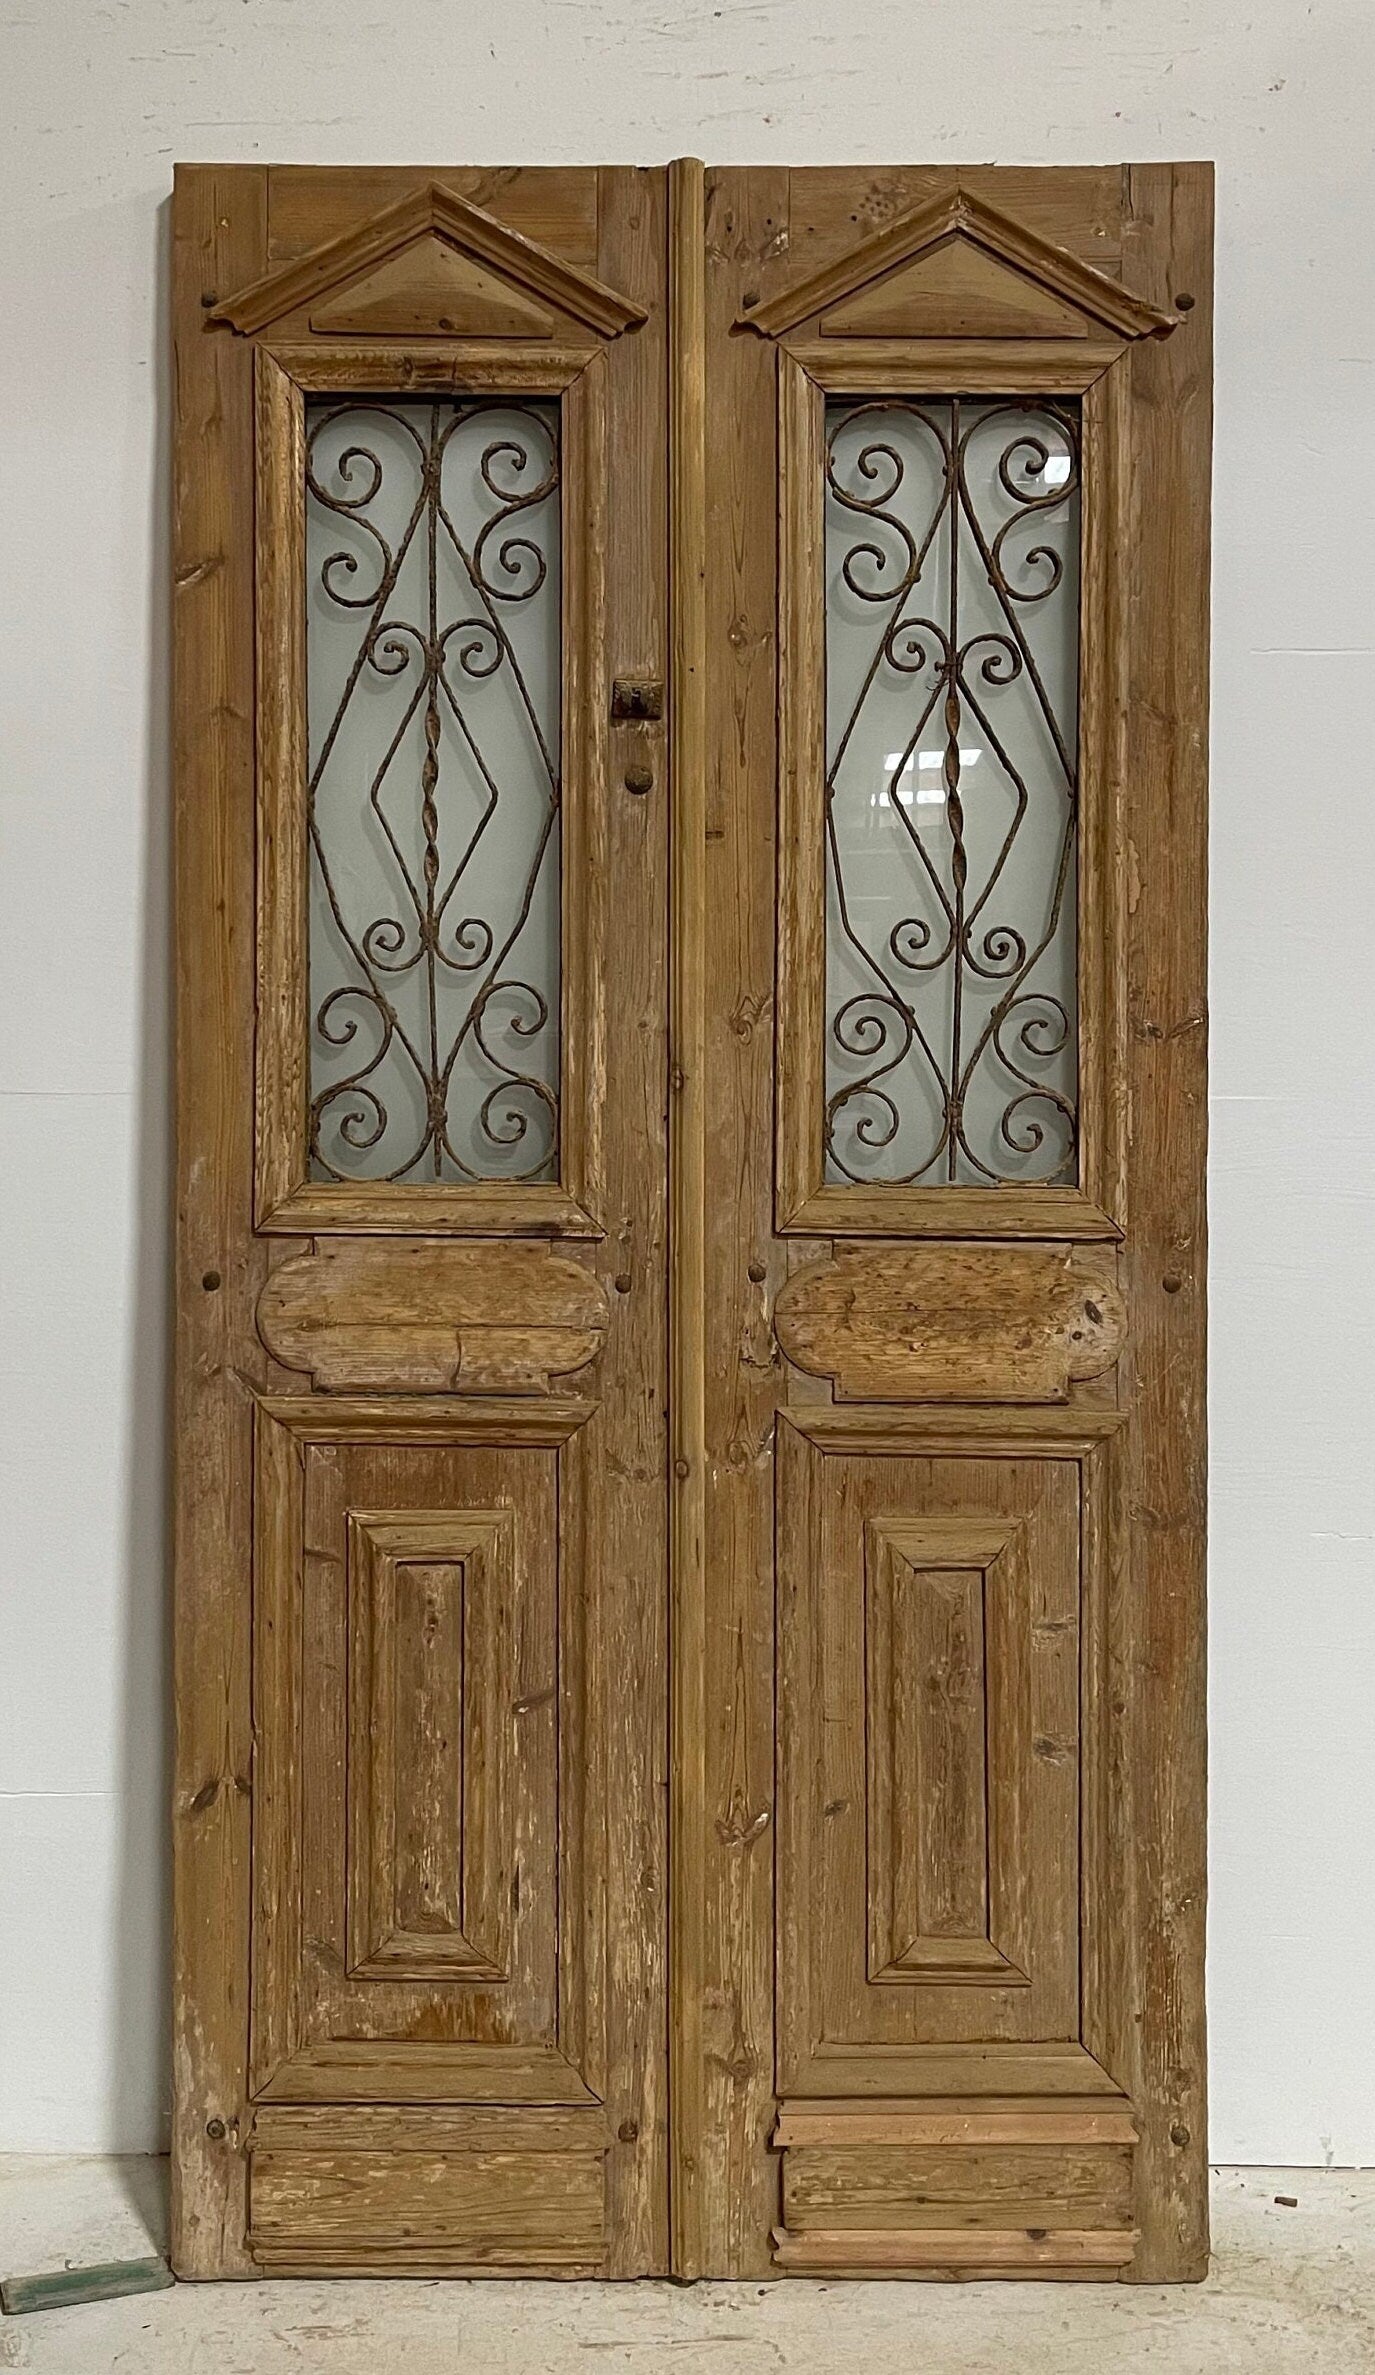 Antique French panel door with metal (87x42.75) G0963s